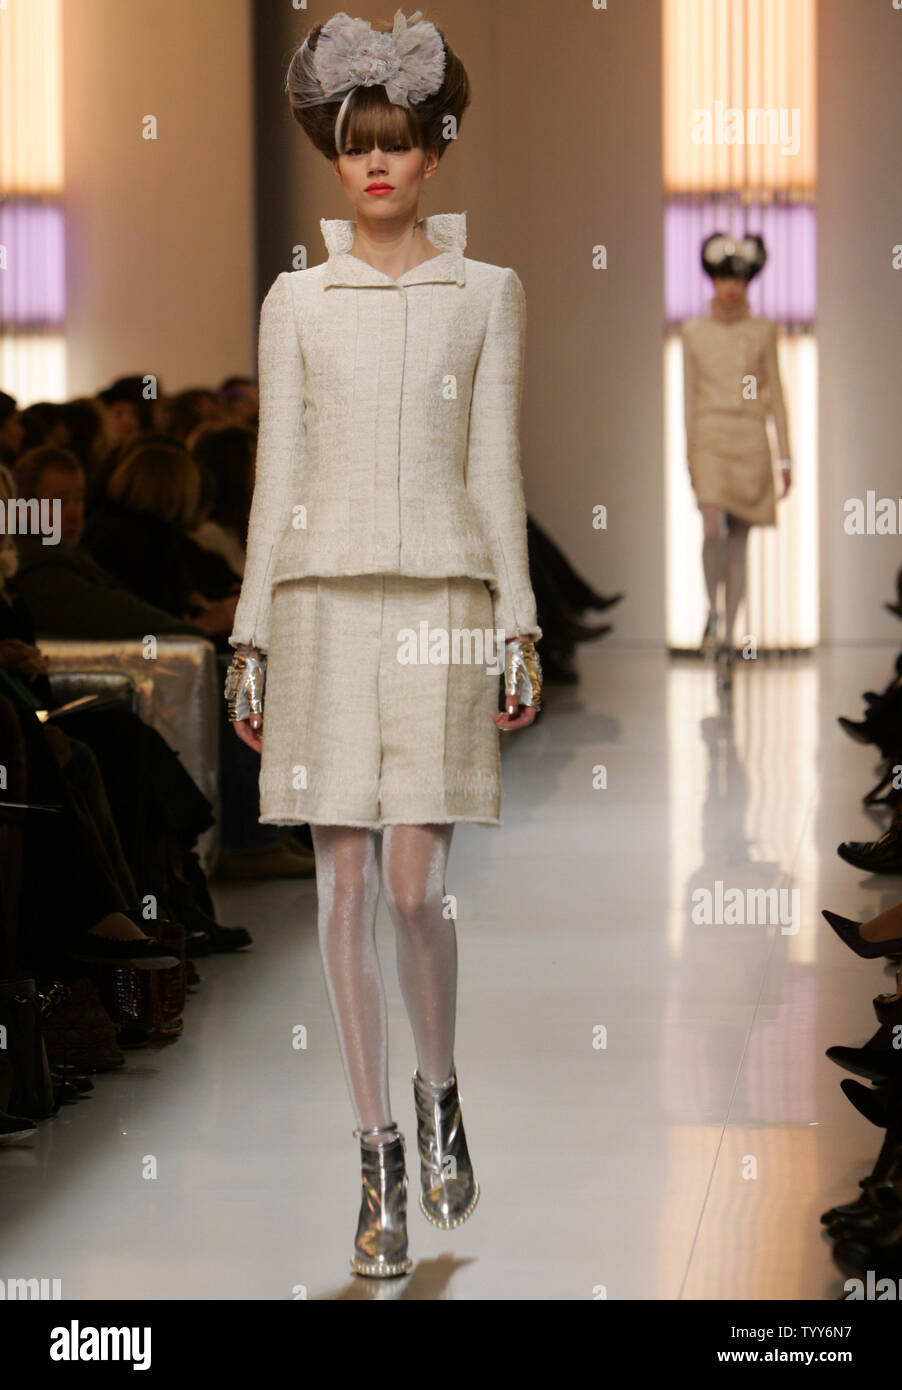 Chanel Spring Summer 2023 Collection at Paris Fashion Week, Photos –  Footwear News